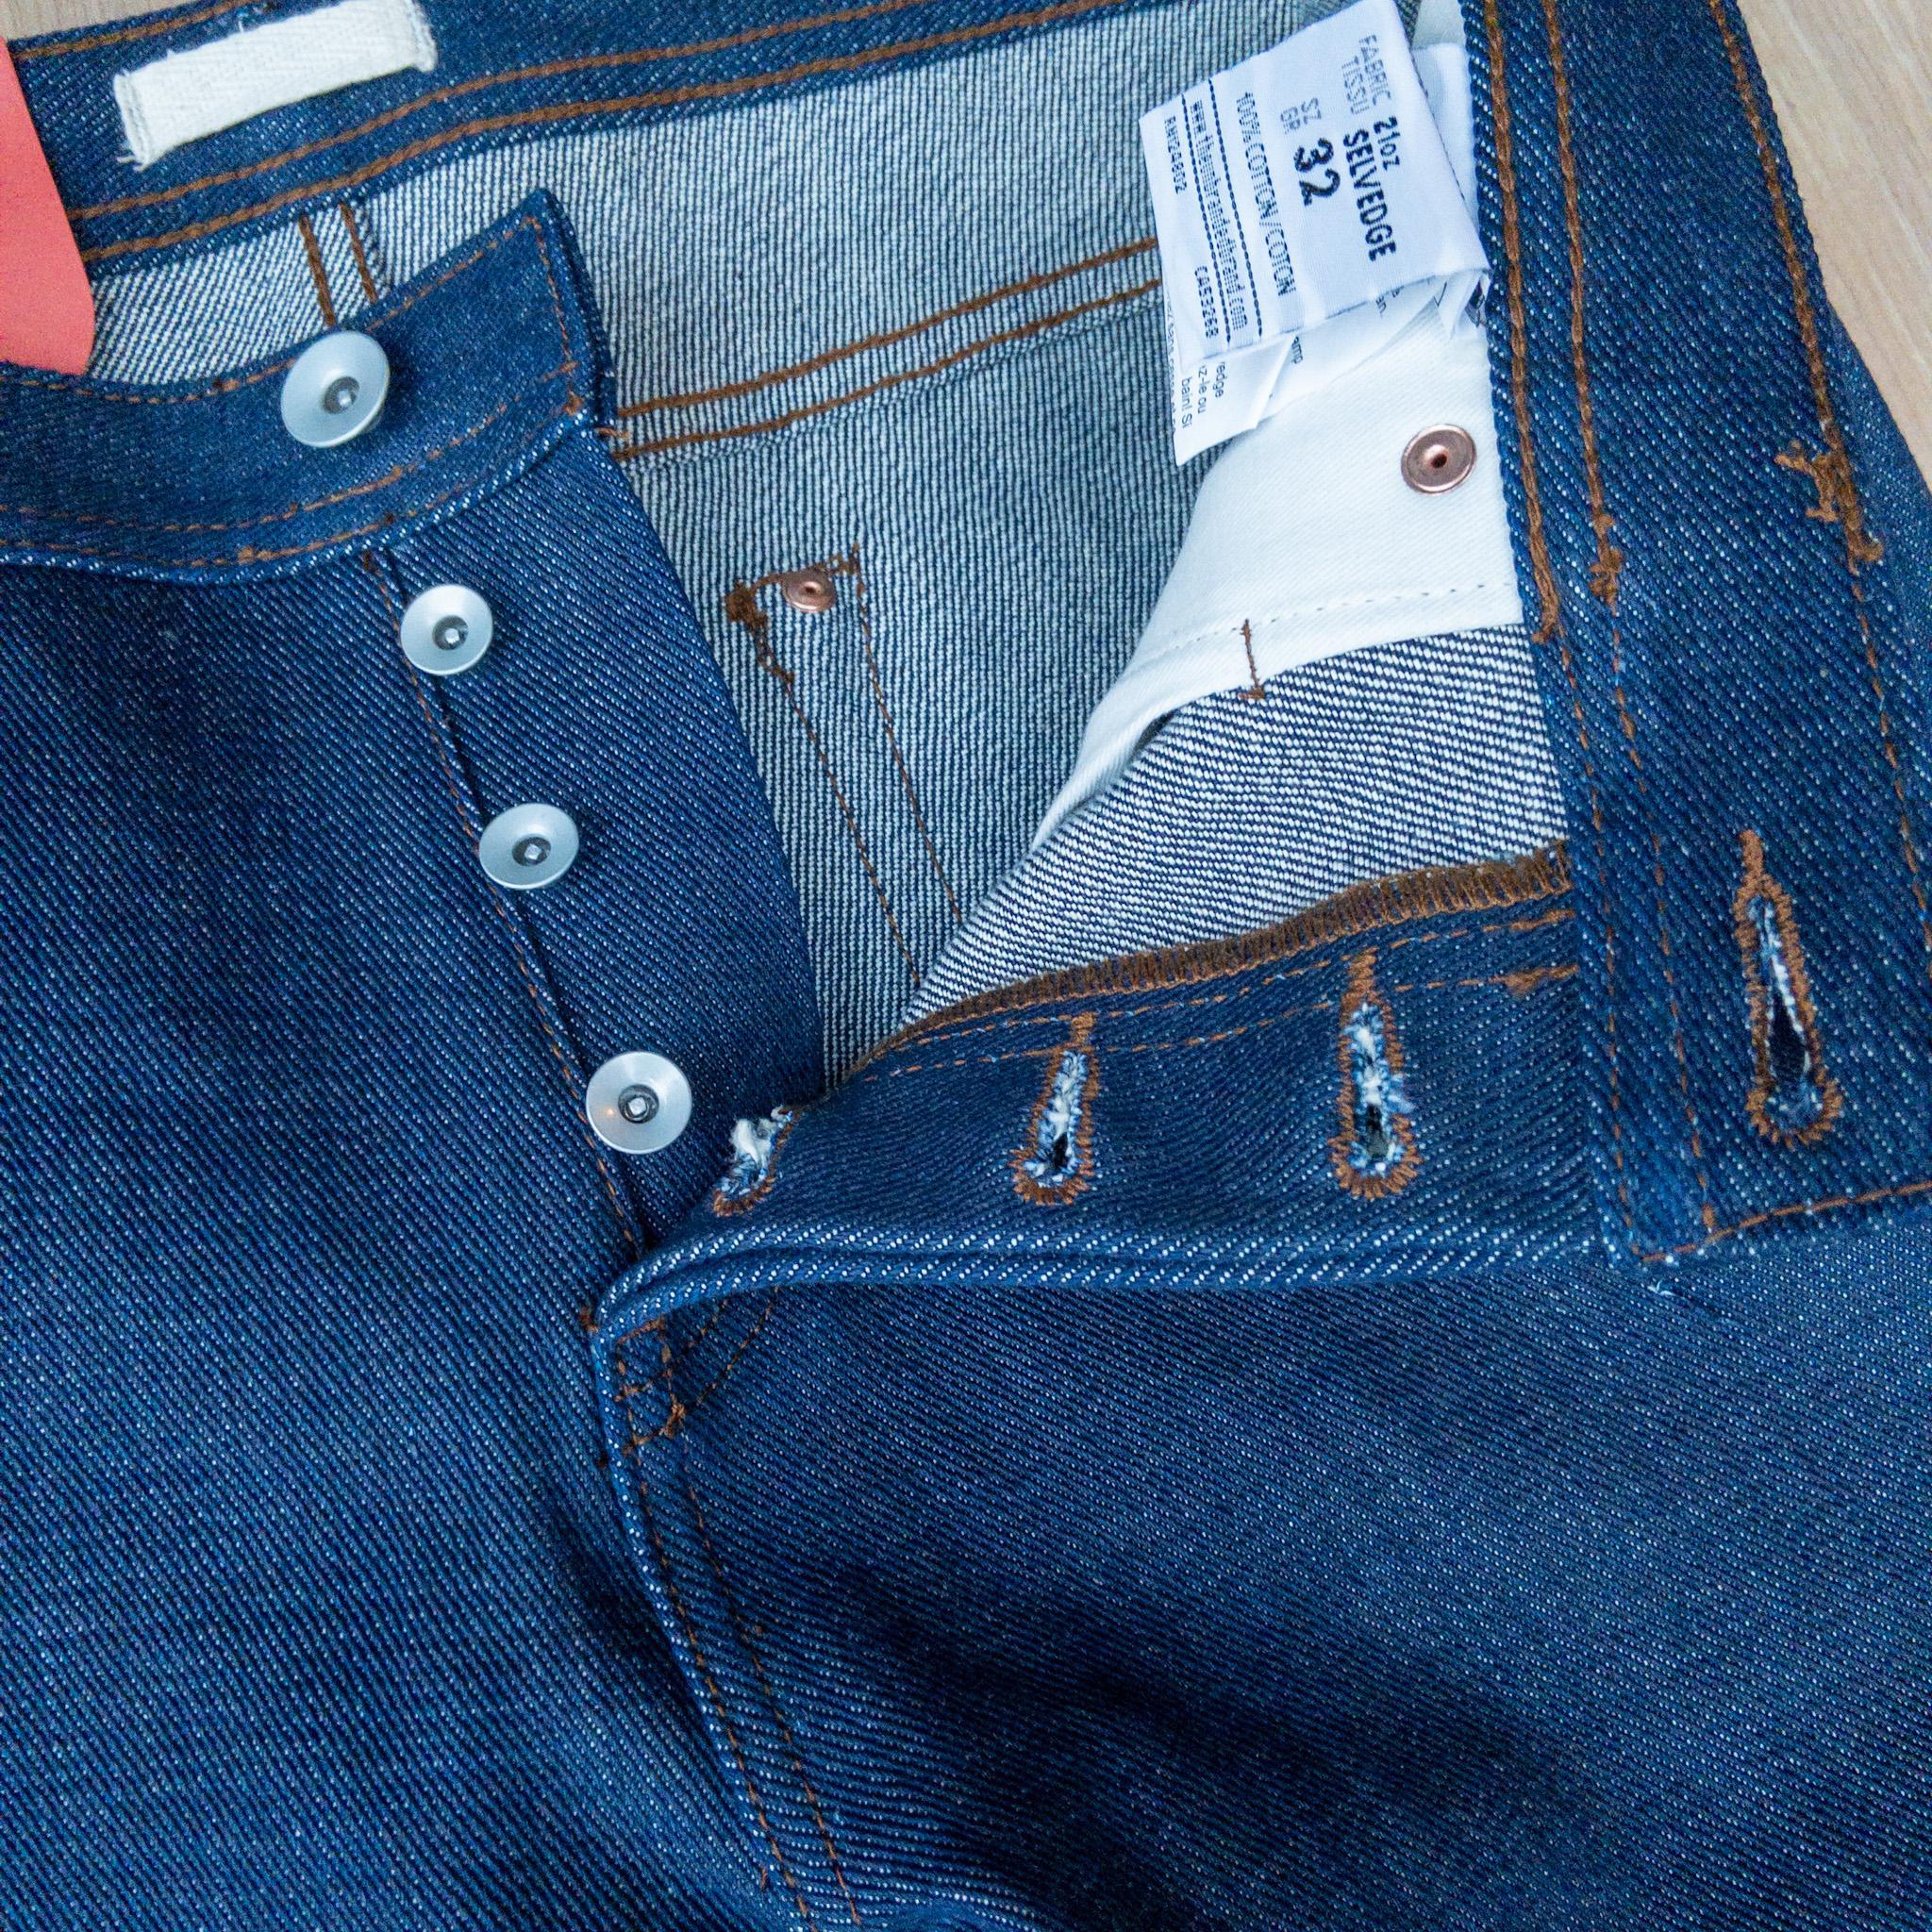 Unbranded UB121 skinny fit 21 oz. heavyweight indigo selvedge jeans -  Crimson Serpents Outpost